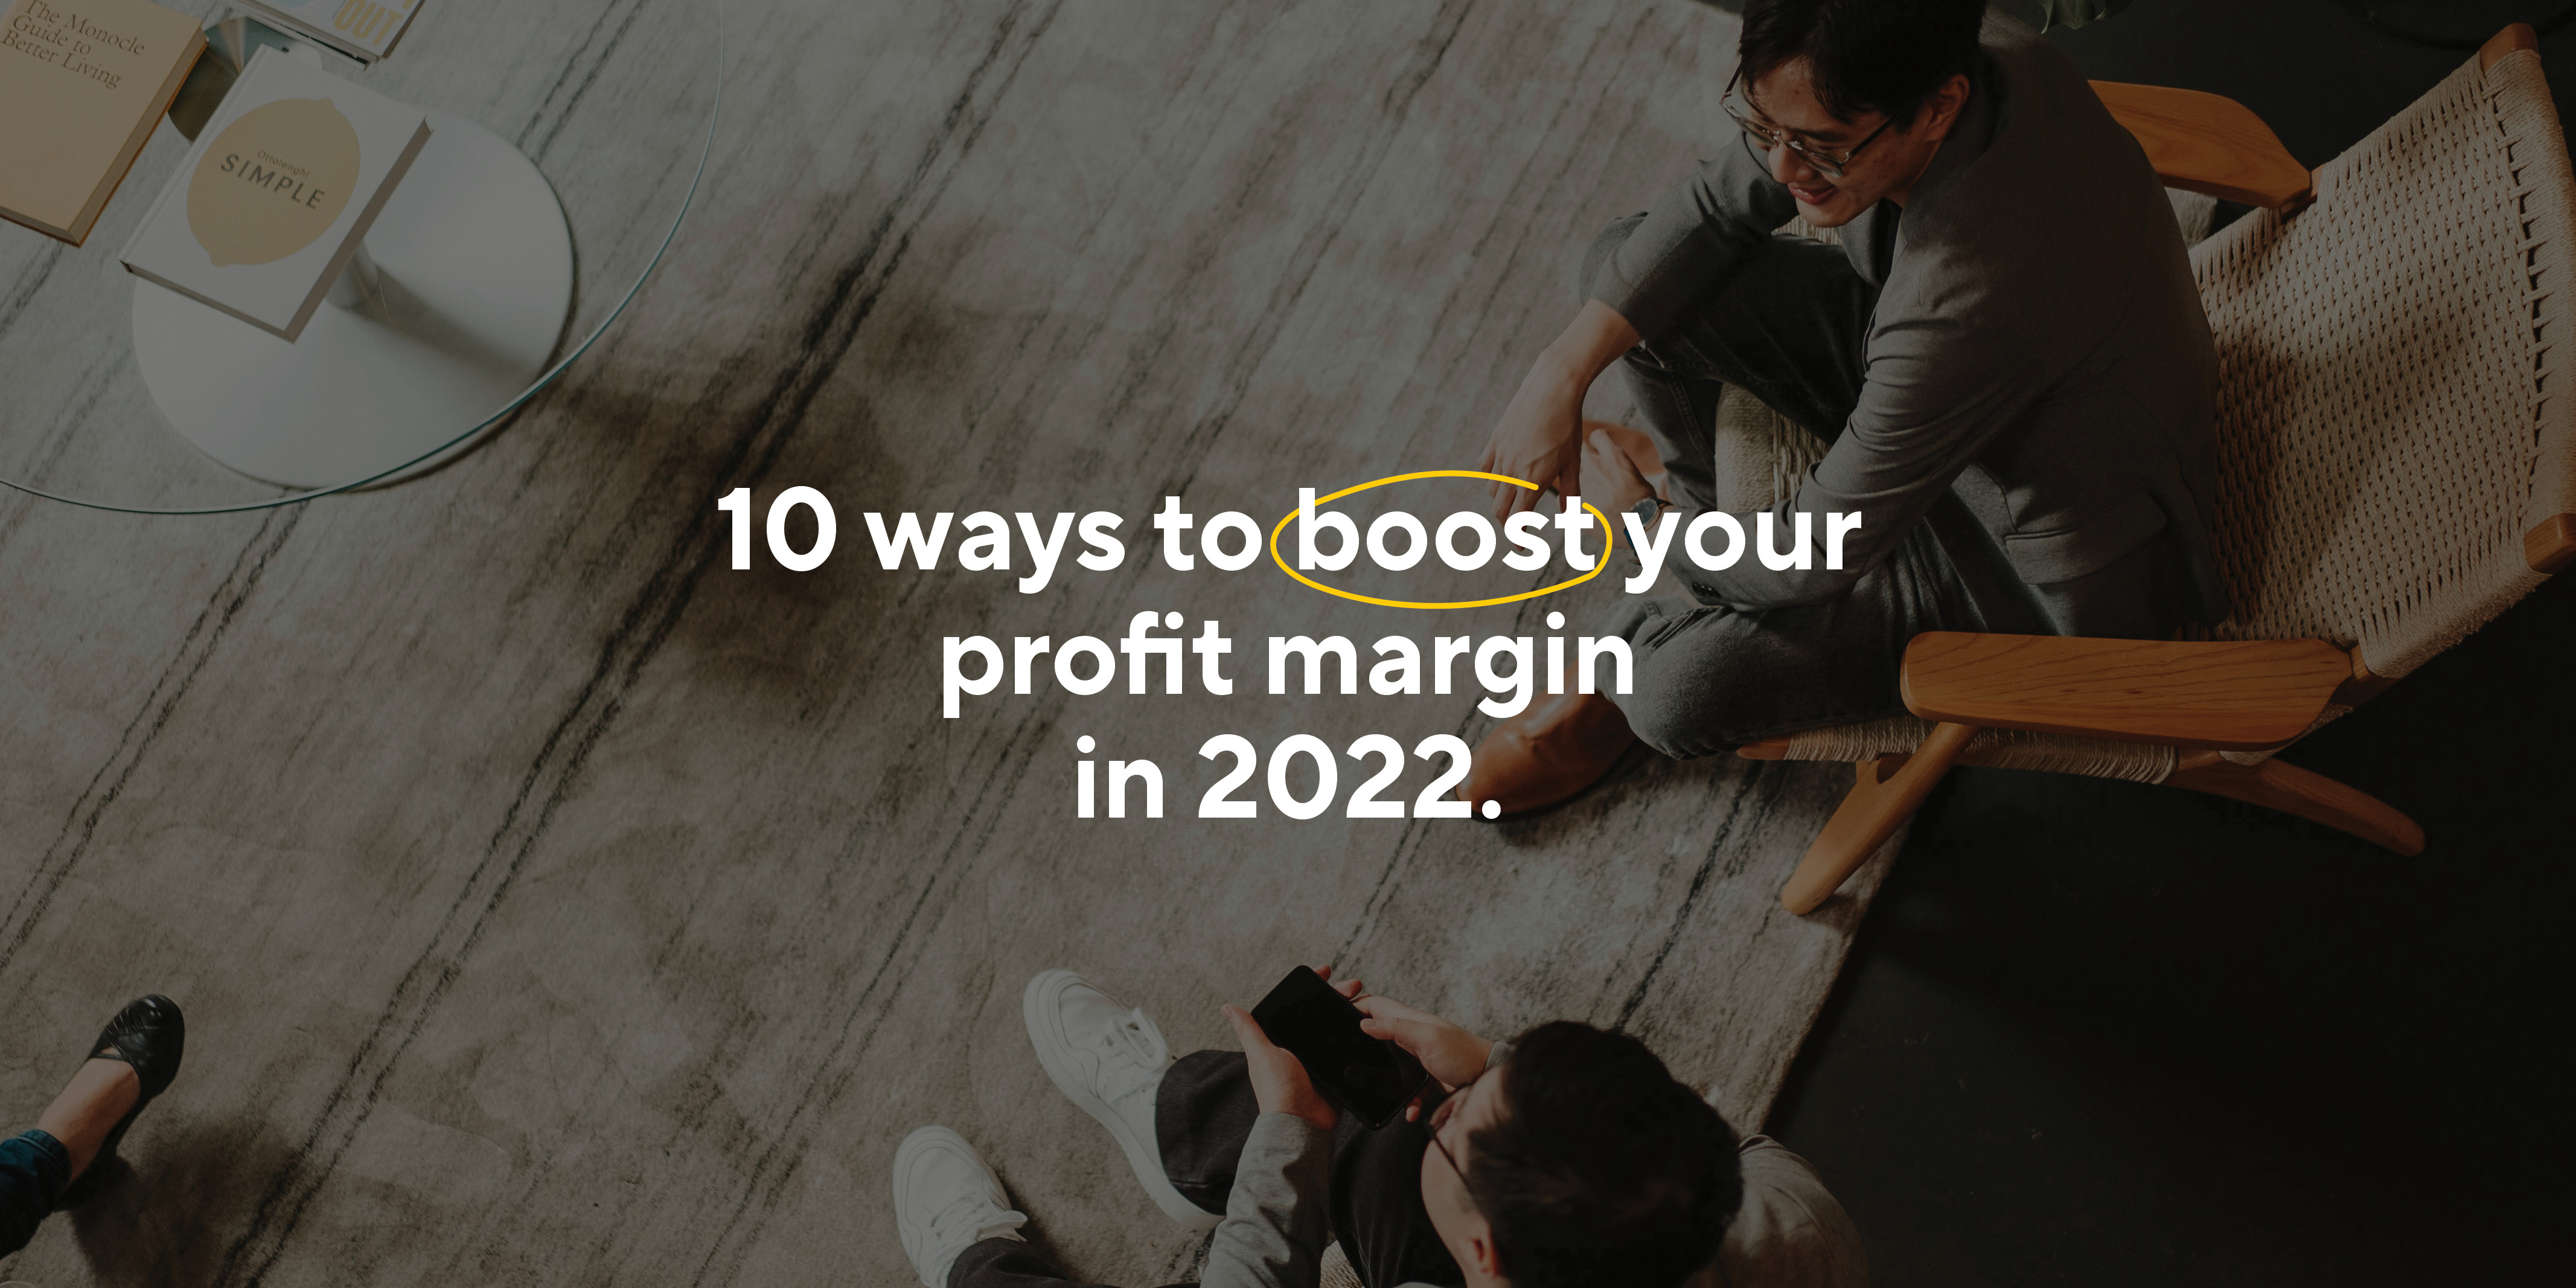 Orbit’s Smsf Accountant, Eric Kurnadi Discussing Ways To Boost Profit Margin In 2022